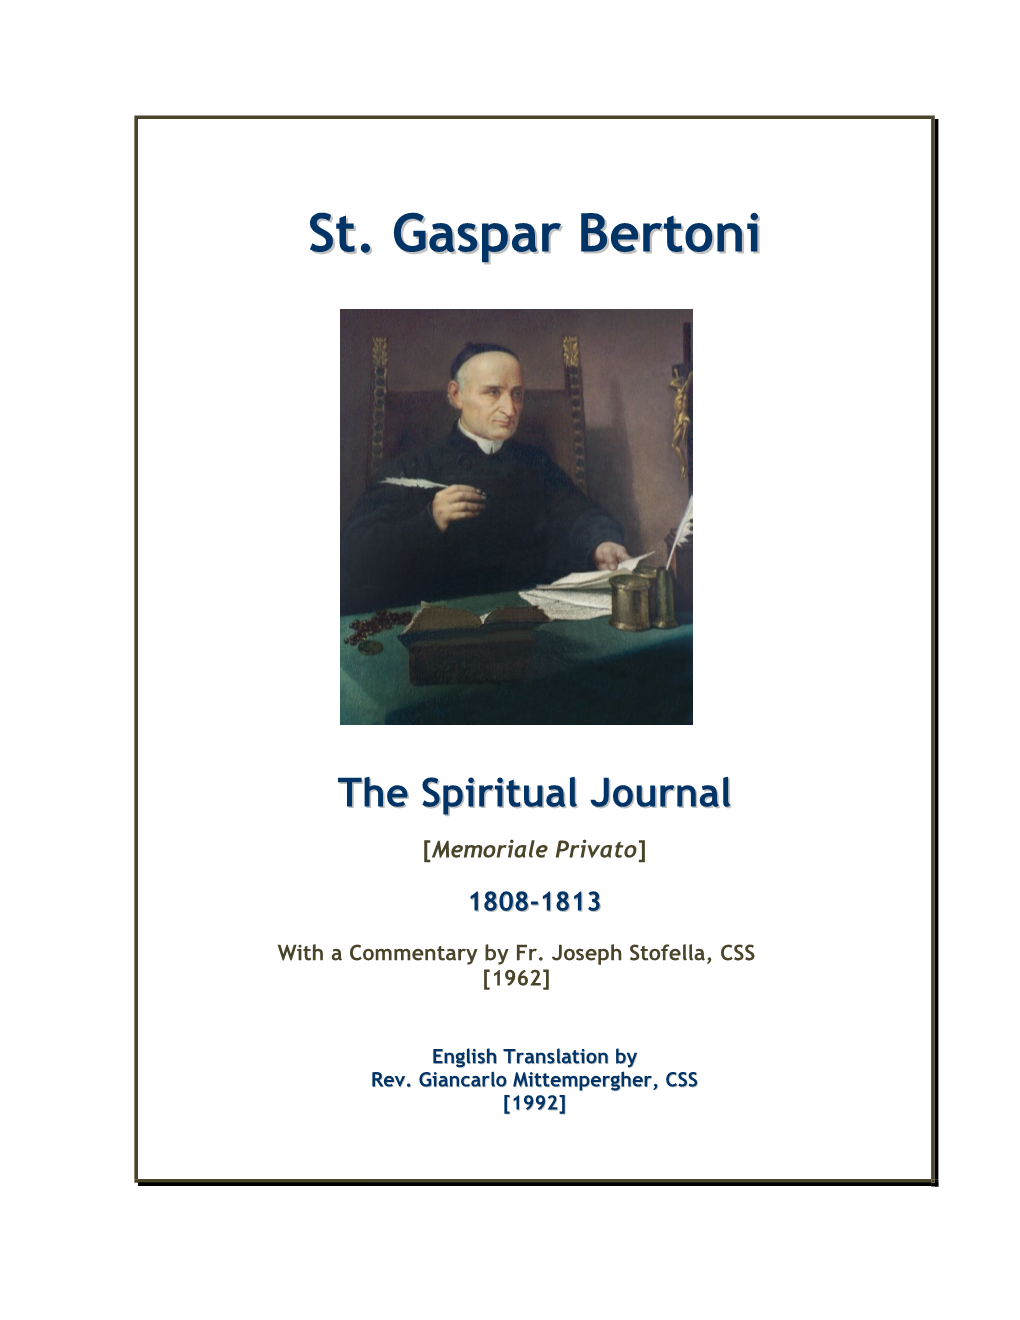 St. Gaspar Bertoni: the Spiritual Journal 15